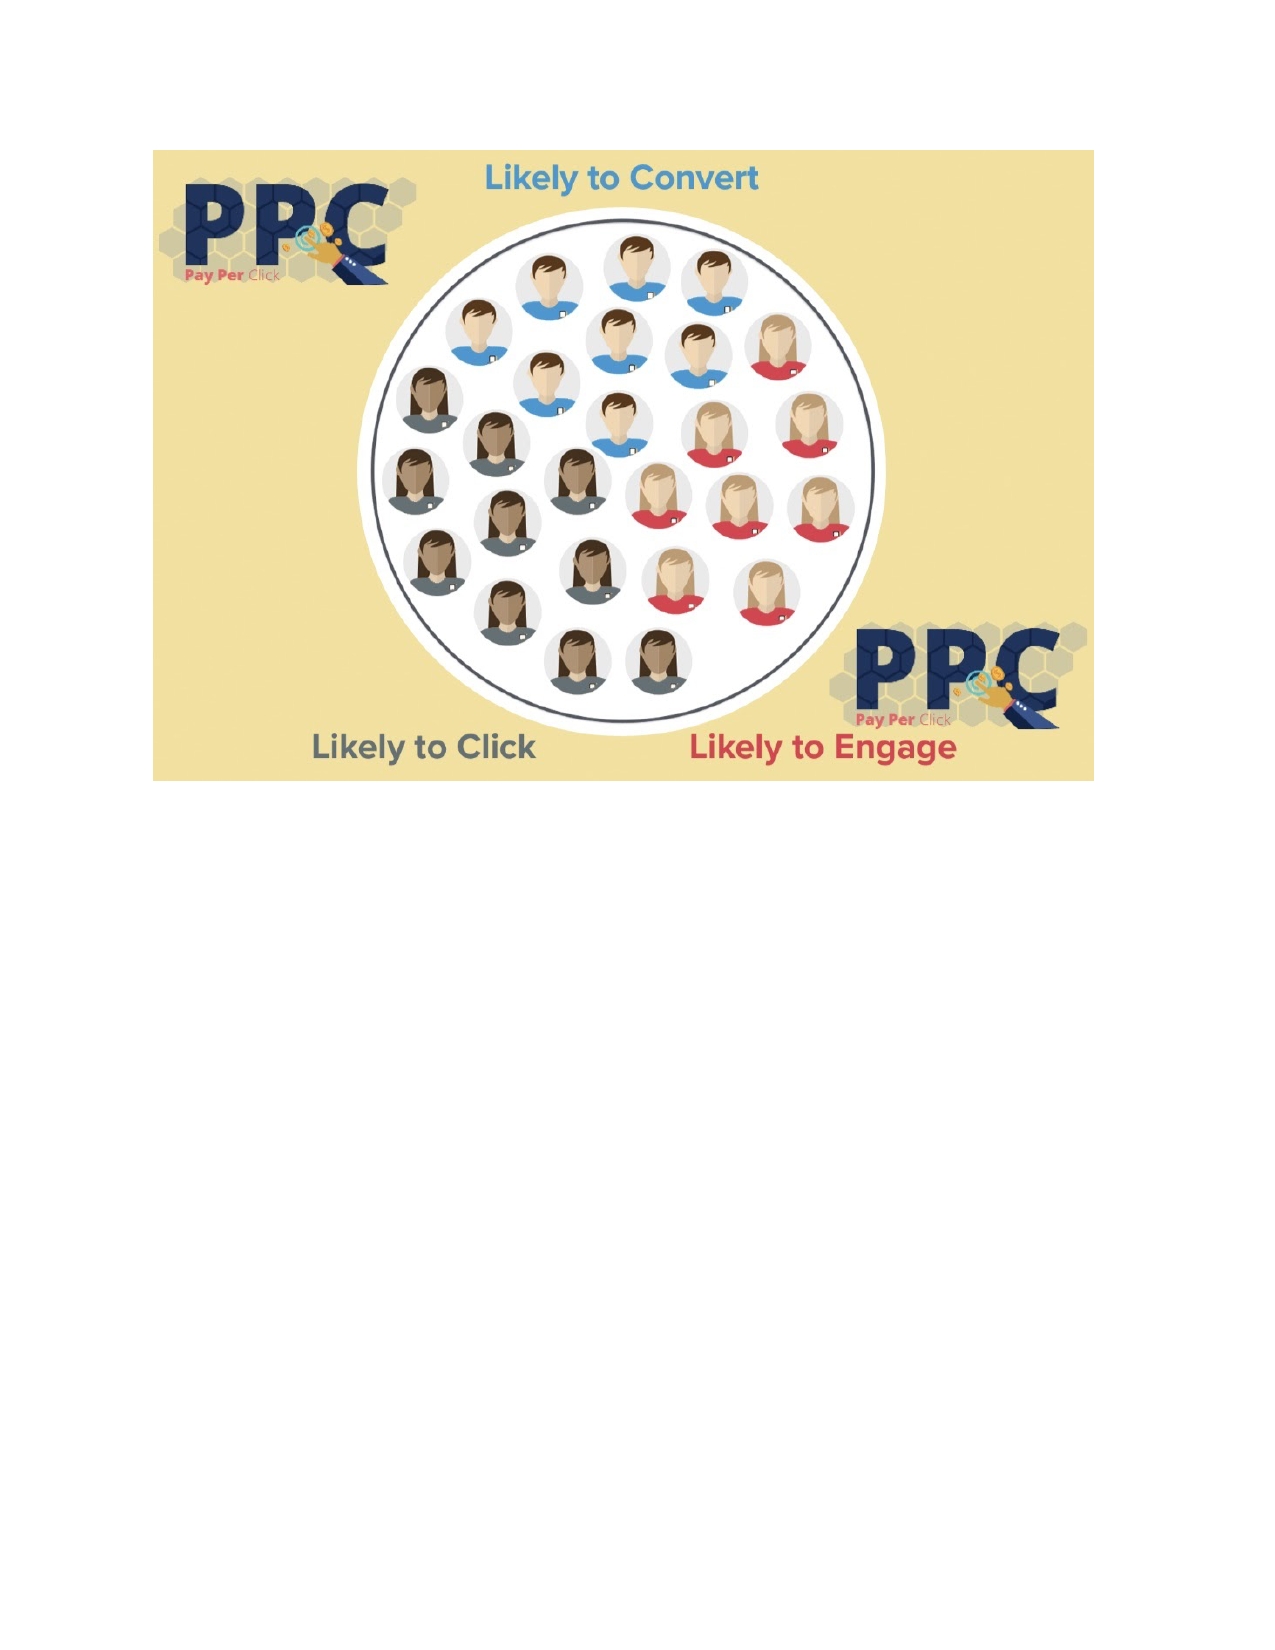 Benefits of PPC Marketing